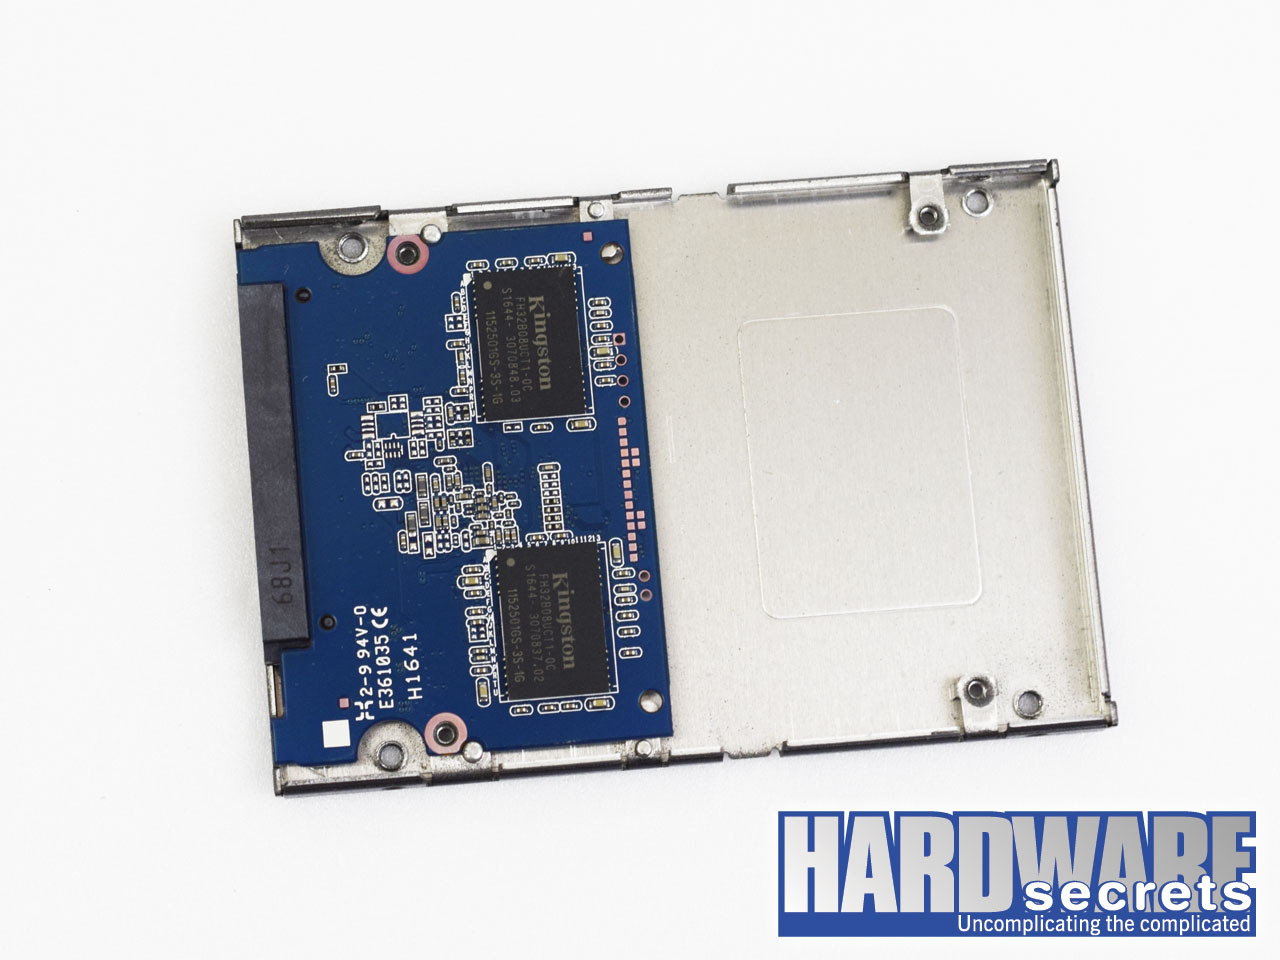 Faculty Evolve tie Kingston A400 120 GiB SSD Review - Hardware Secrets